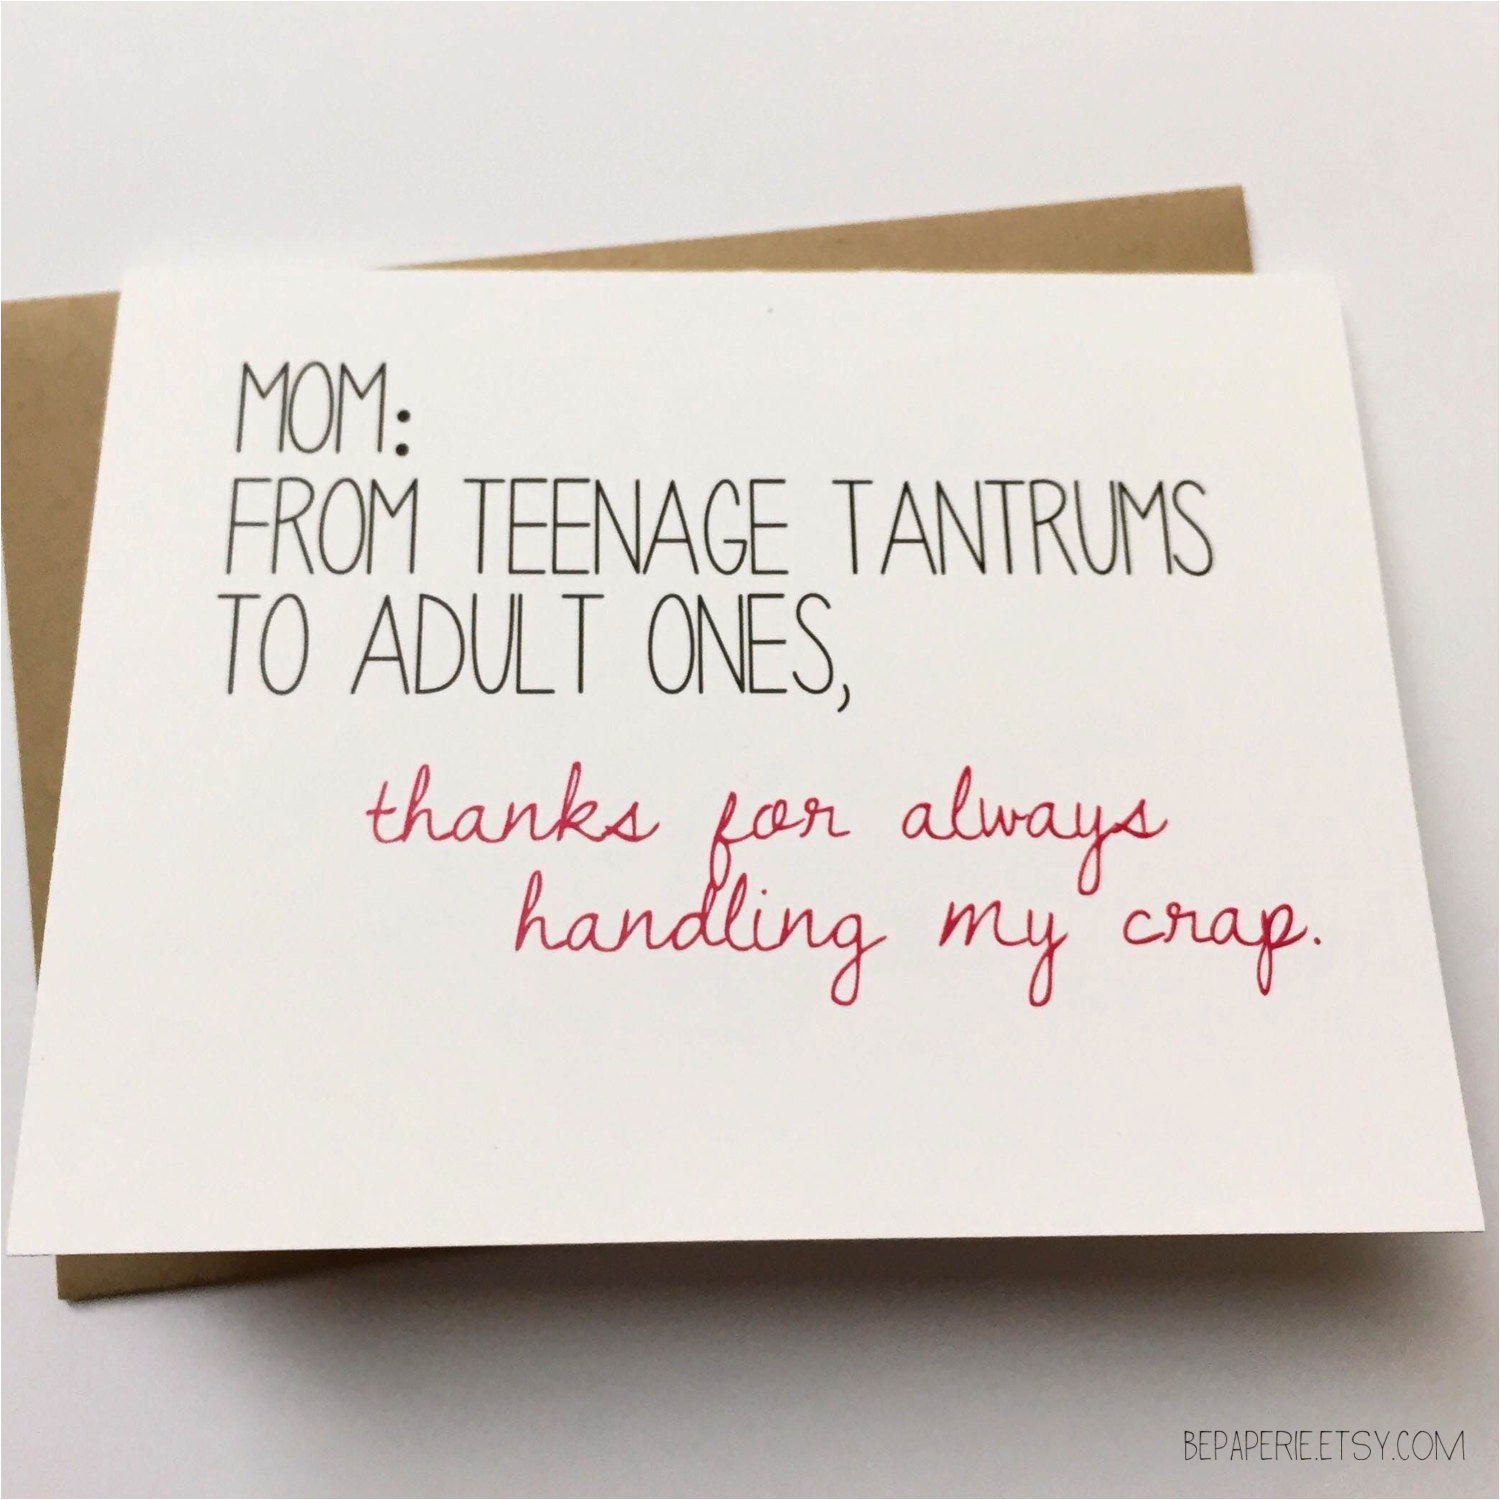 Funny Birthday Cards Ideas Funny Birthday Card Ideas For Mom Mom Card Funny Card For Mom Mom